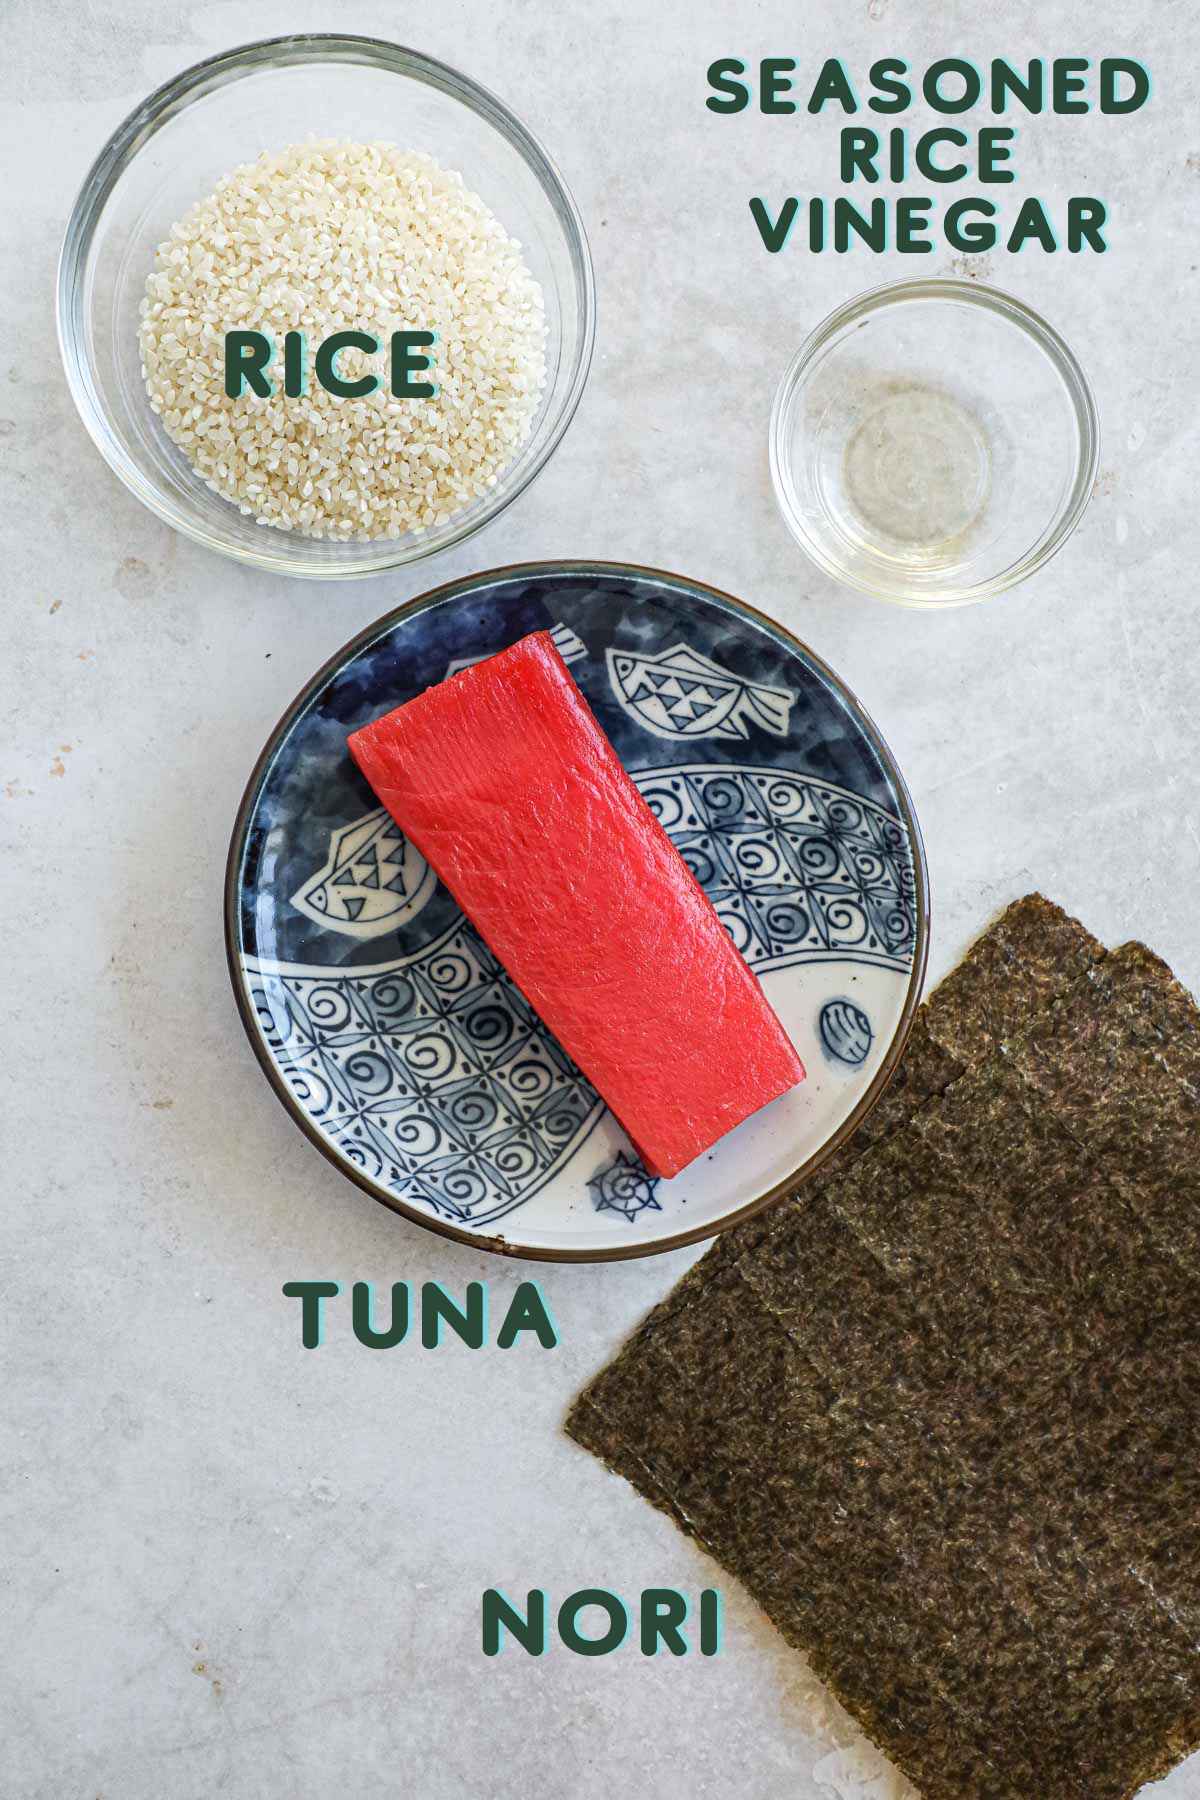 Ingredients for tekka maki, including fresh sushi-grade tuna, Japanese rice, seasoned rice vinegar, and nori.